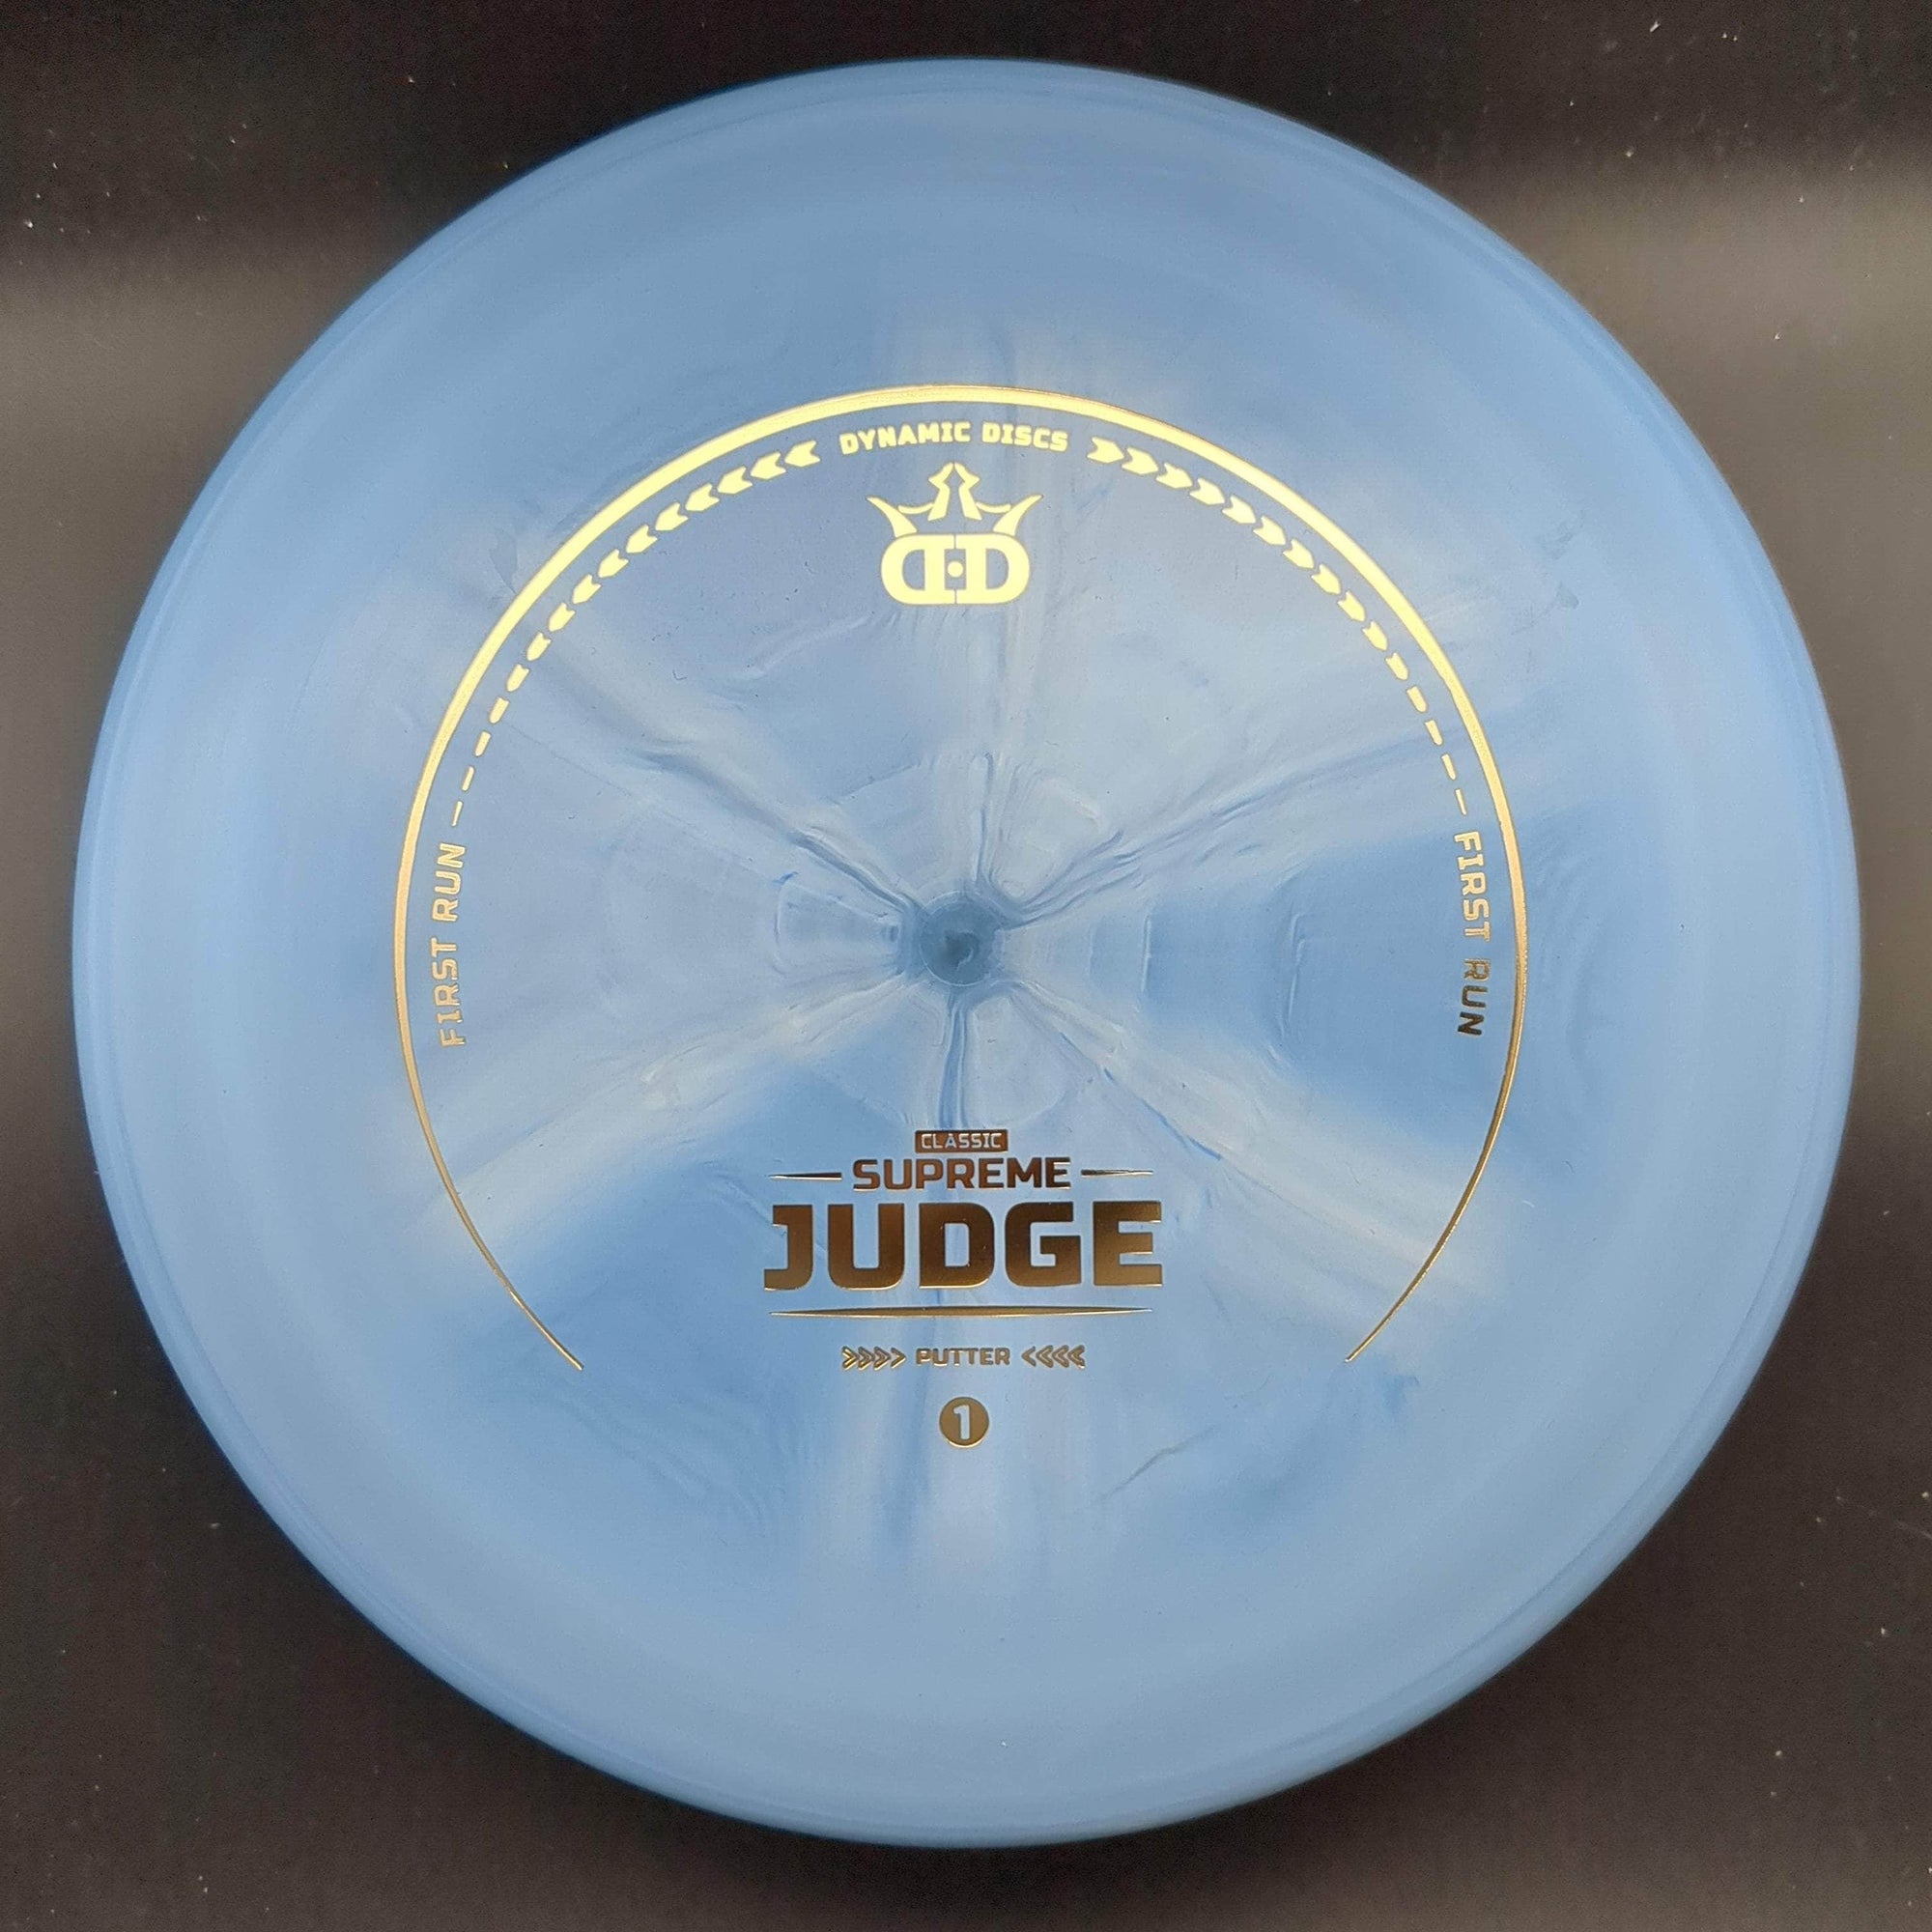 Dynamic Discs Putter Light Blue 173g Judge, Supreme, First Run